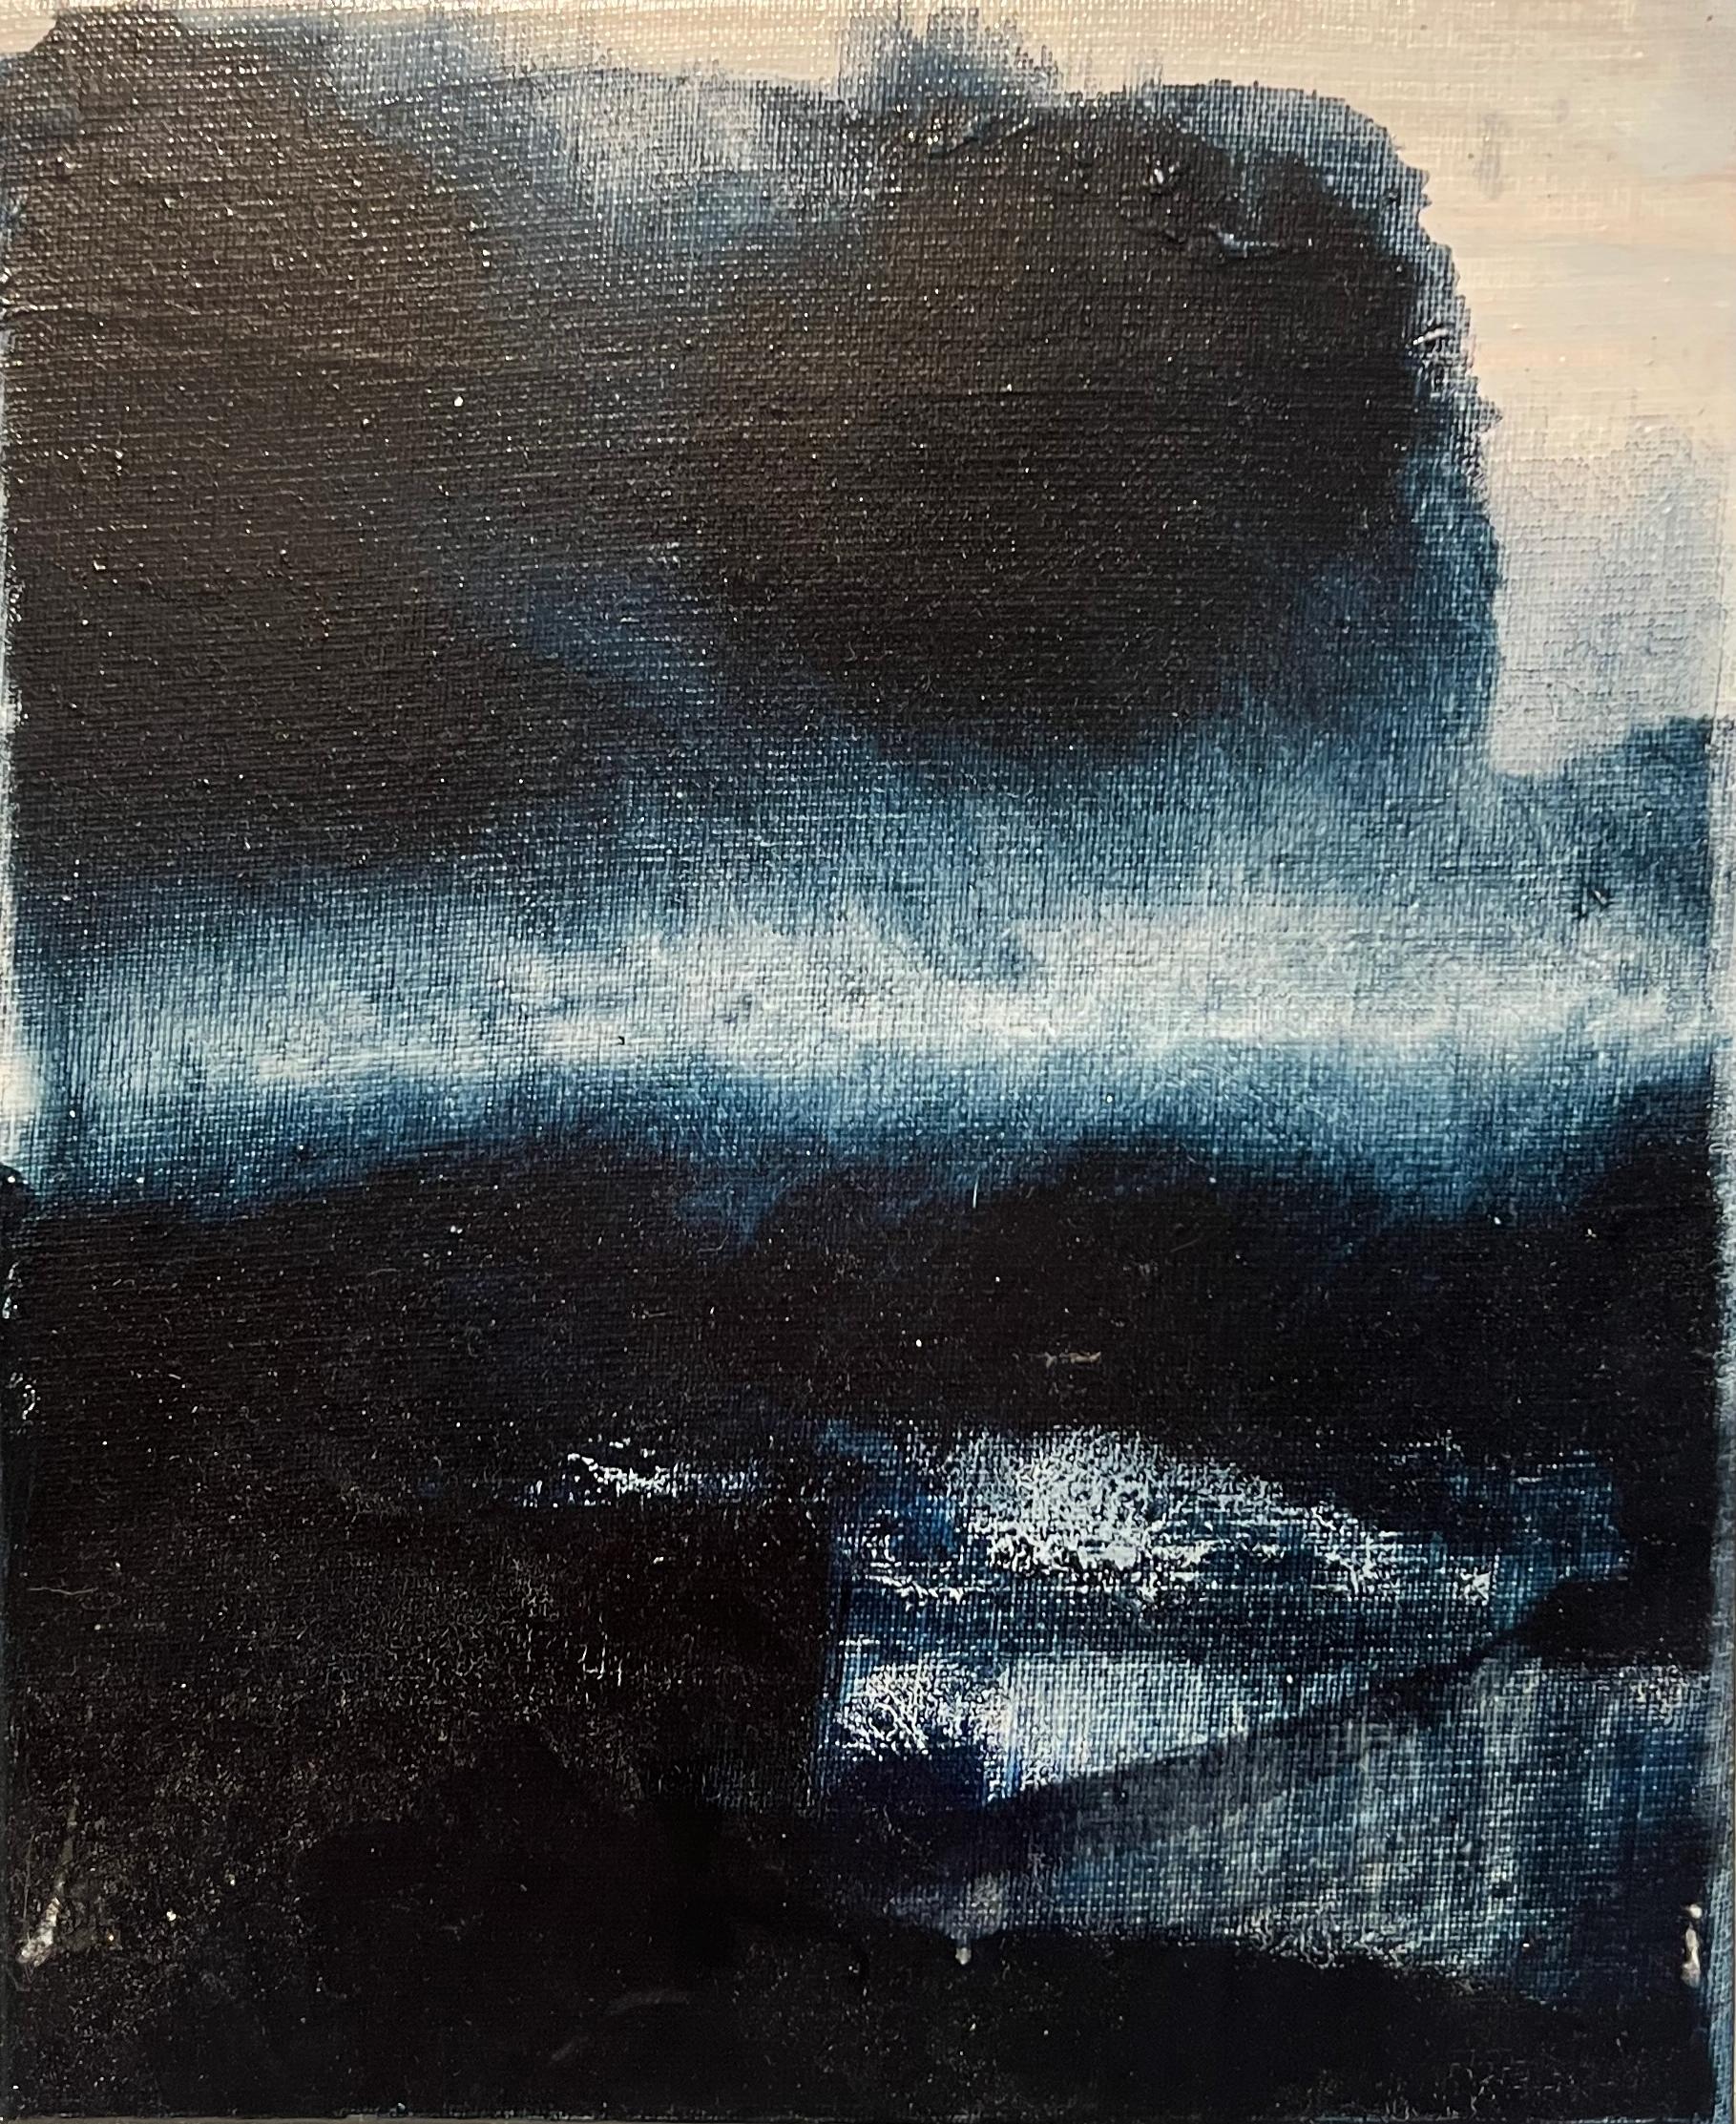 Luis Moscardó Landscape Painting - Landscape, oil on canvas with aluminum frame, sea blue, waves texture